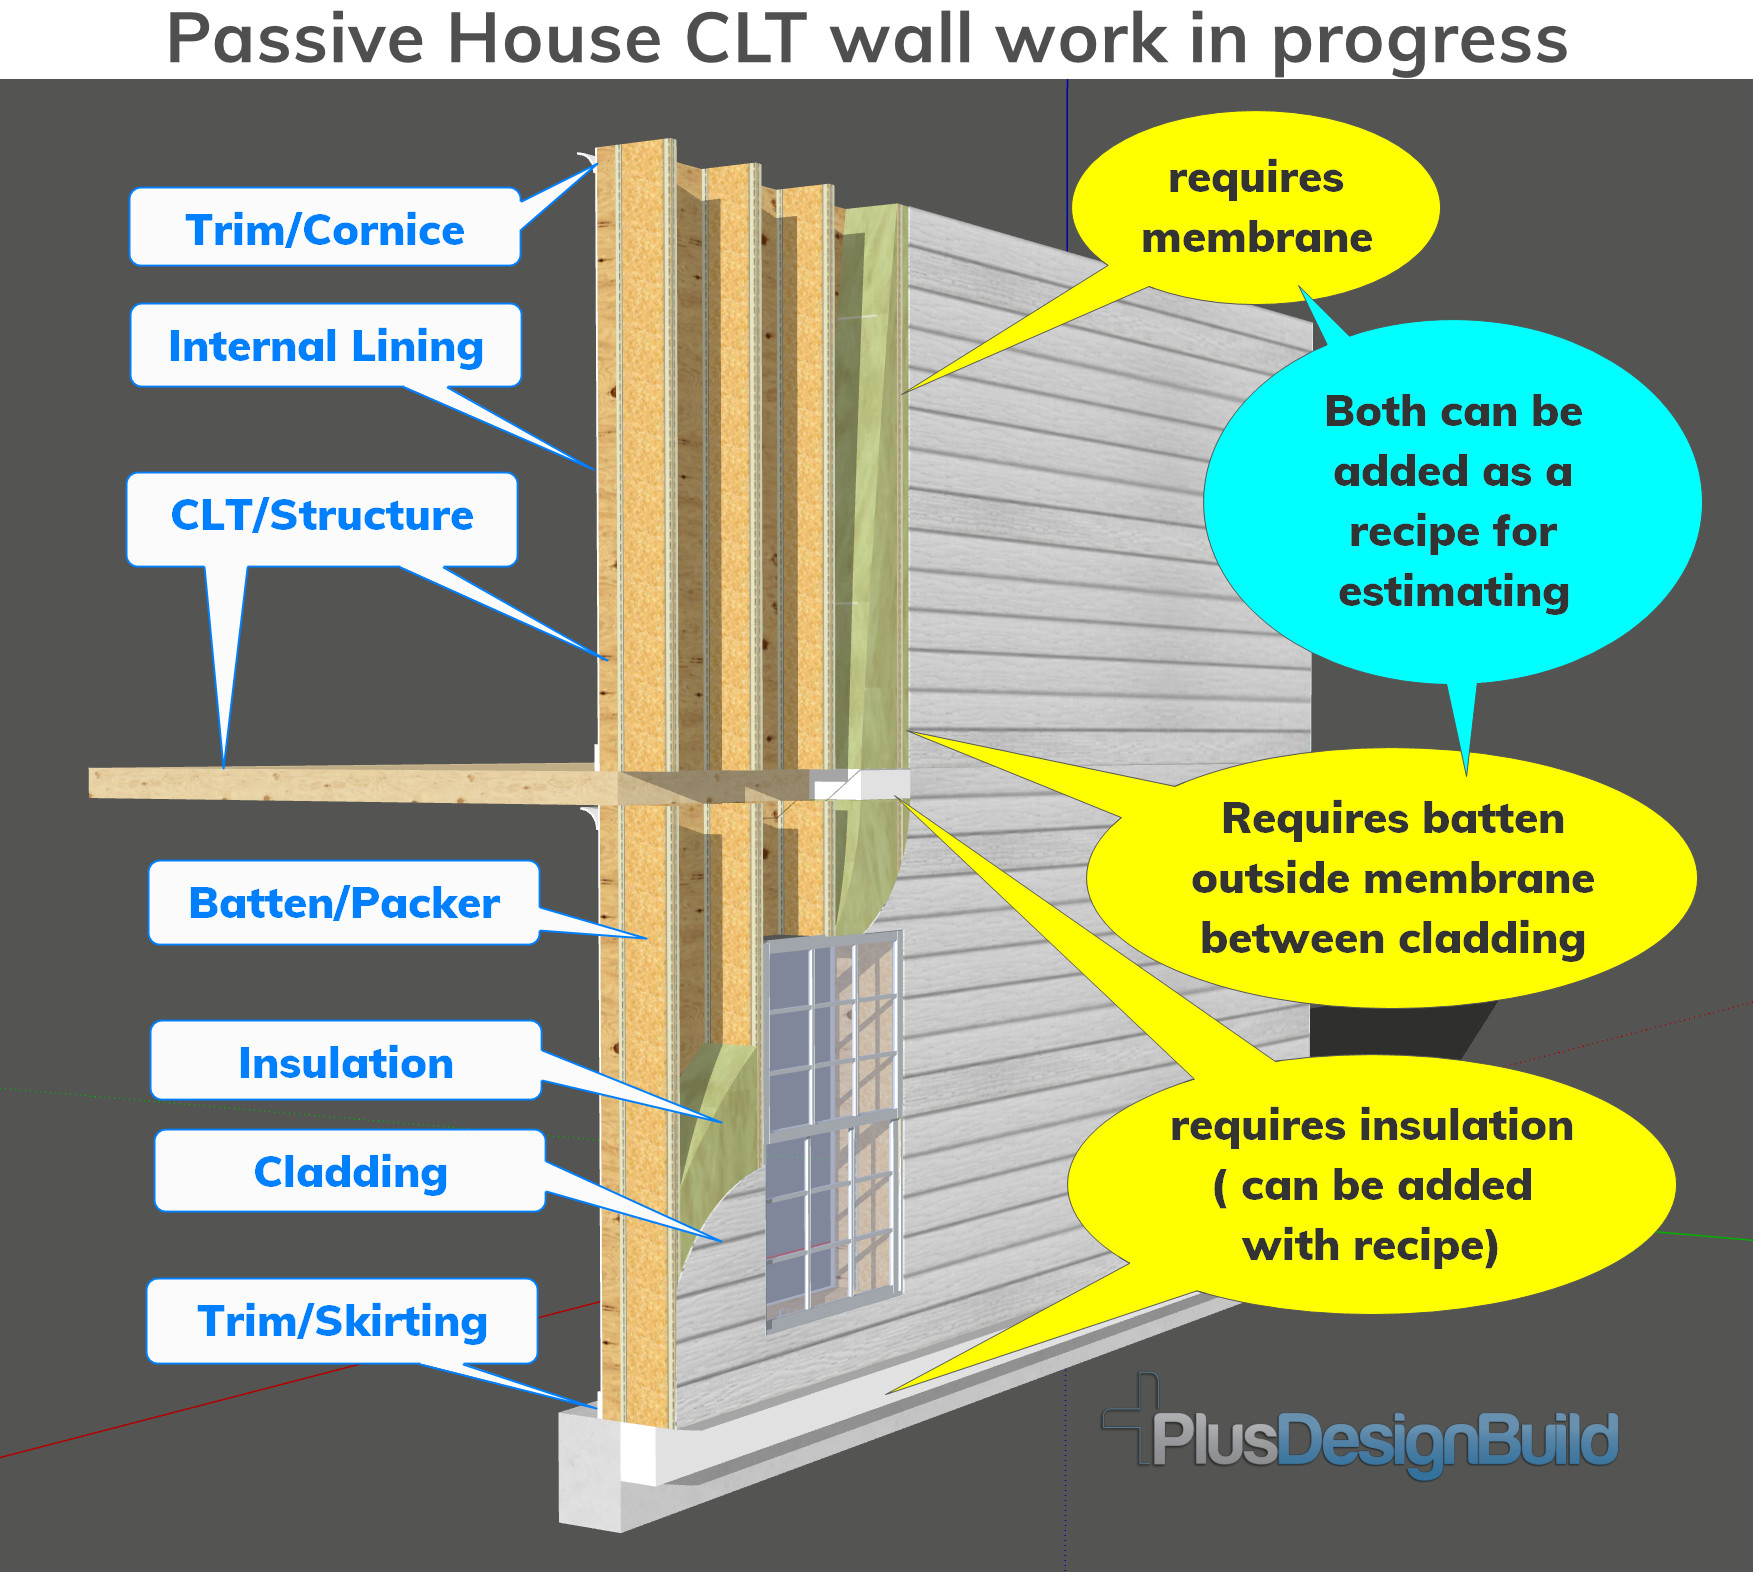 Passive house wall CLT work in progress Sketchup PlusSpec PlusDesignBuild parmatric estimating software.jpg